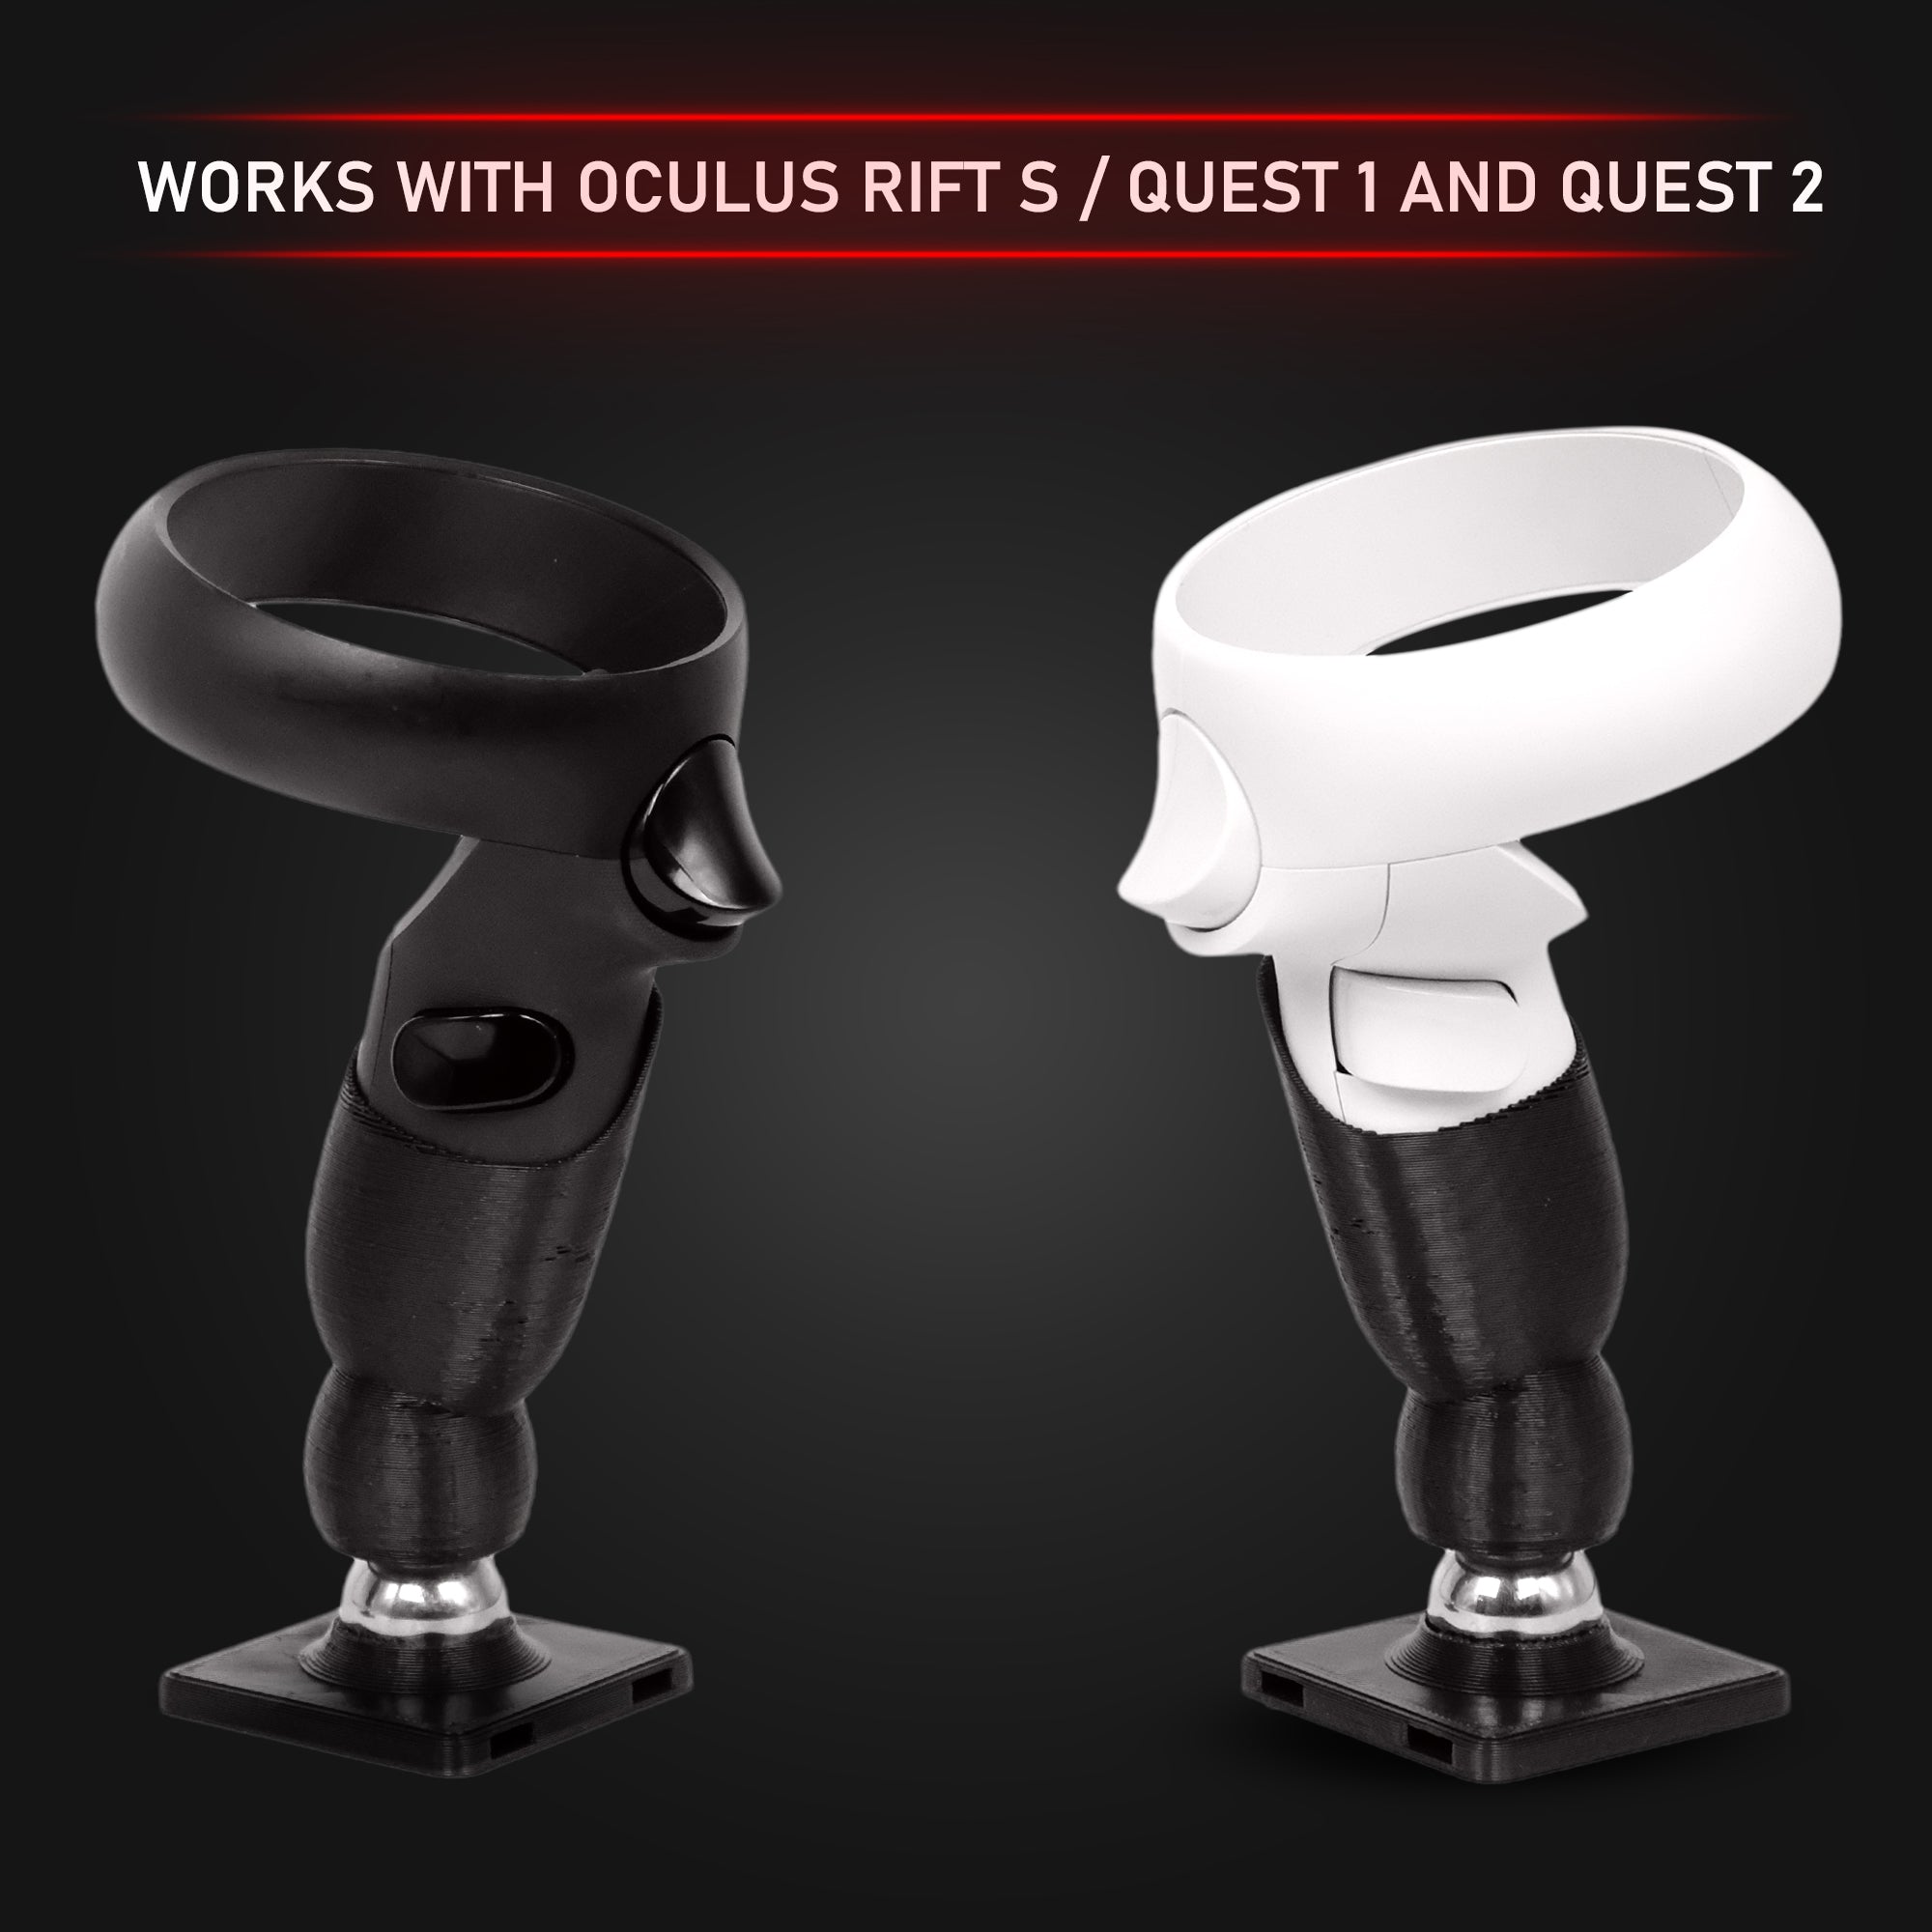 Advanced Flight Stick - Magnetic Detachable Flight Stick for the Oculus Rift S / Meta Quest